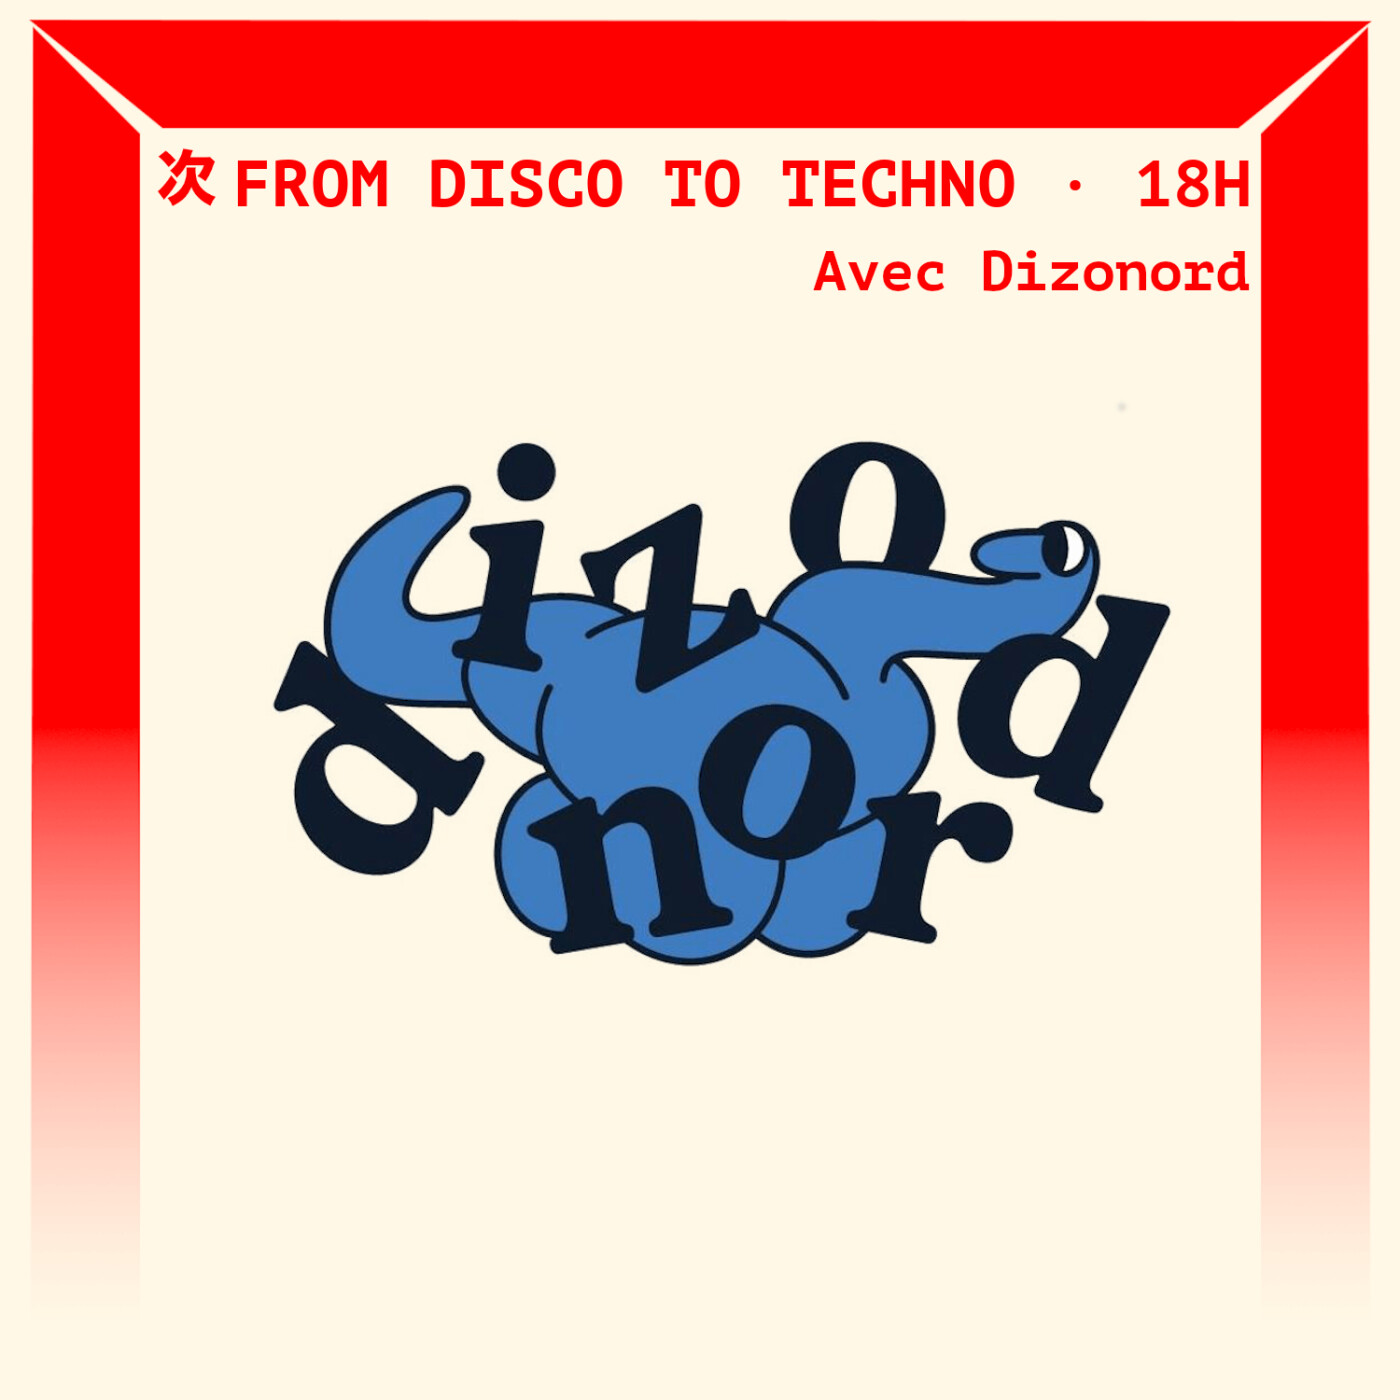 From Disco to Techno avec Xavier Ehretsmann de Dizonord